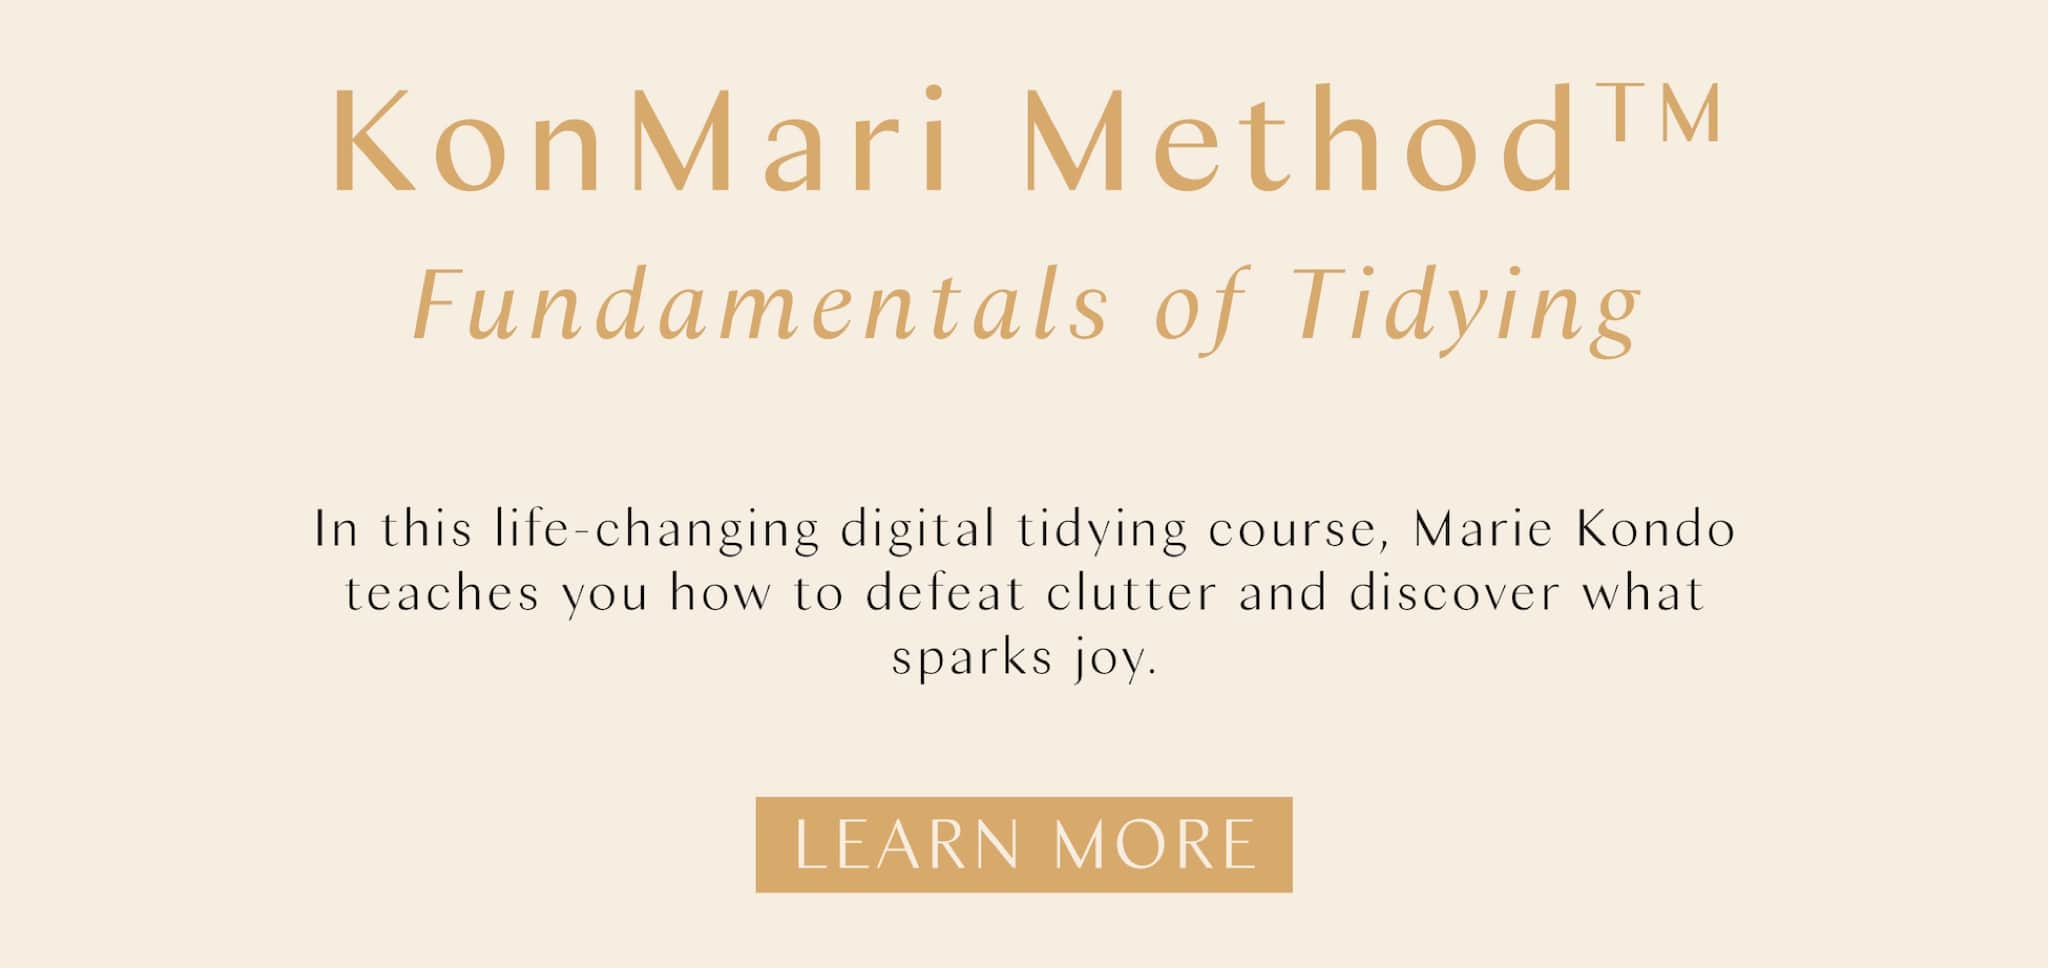 KonMari Method™: Fundamentals of Tidying